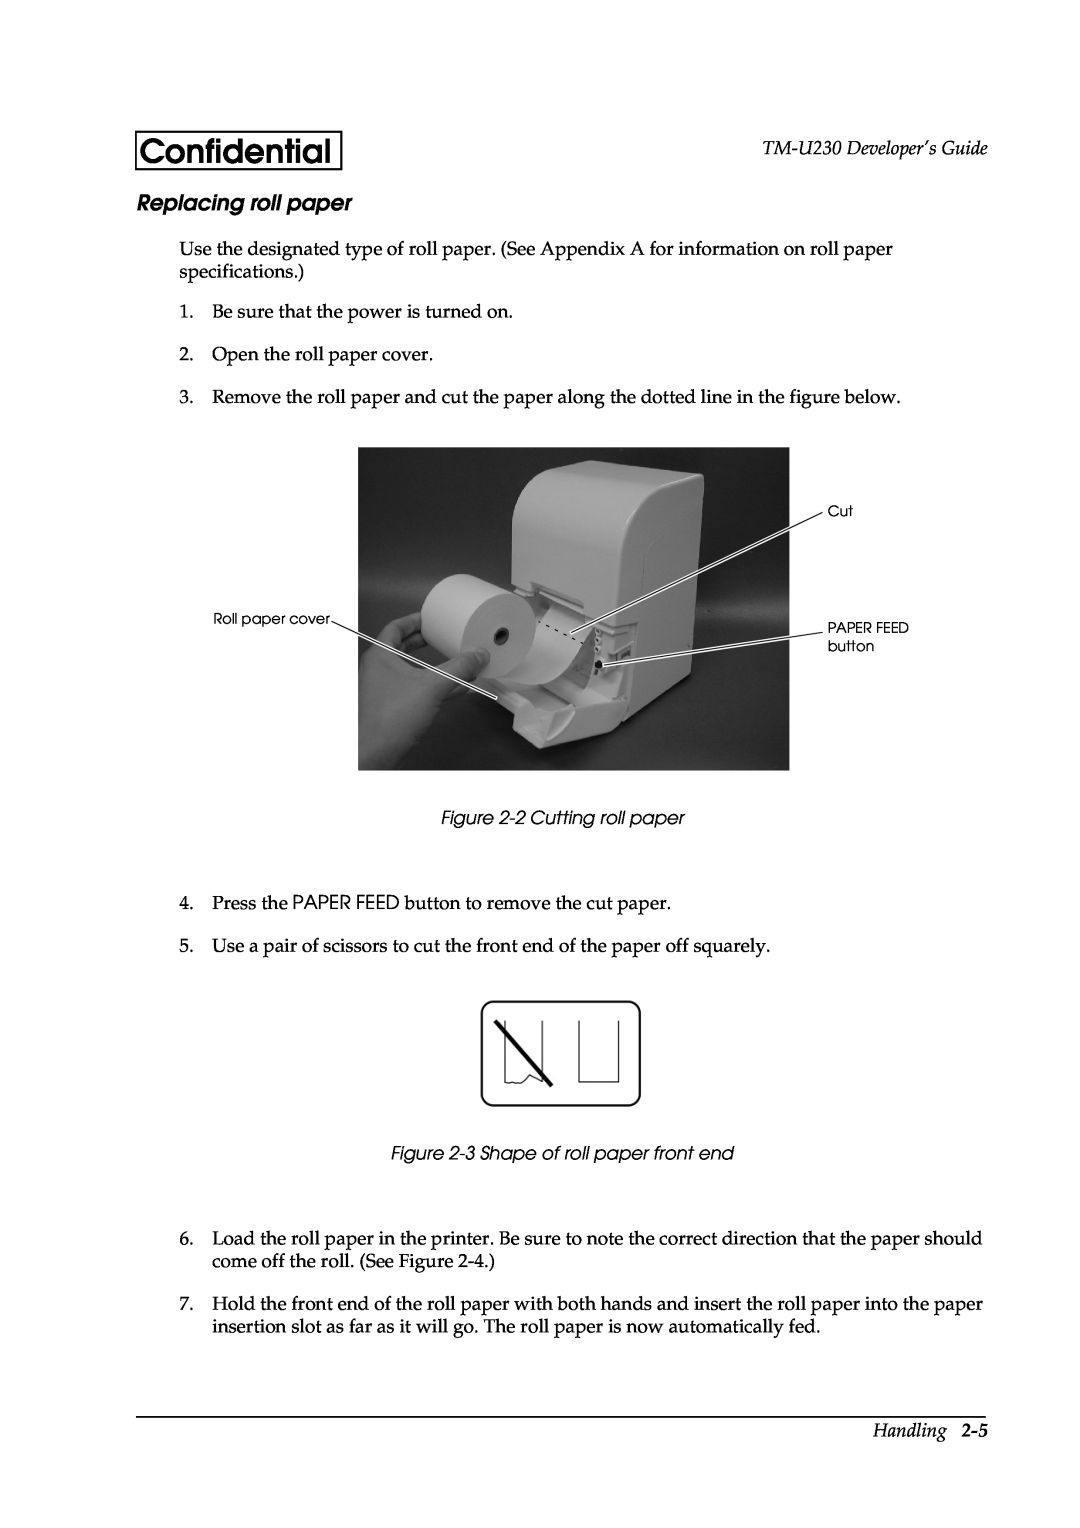 Epson manual Replacing roll paper, Confidential, TM-U230 Developer’s Guide, Handling 